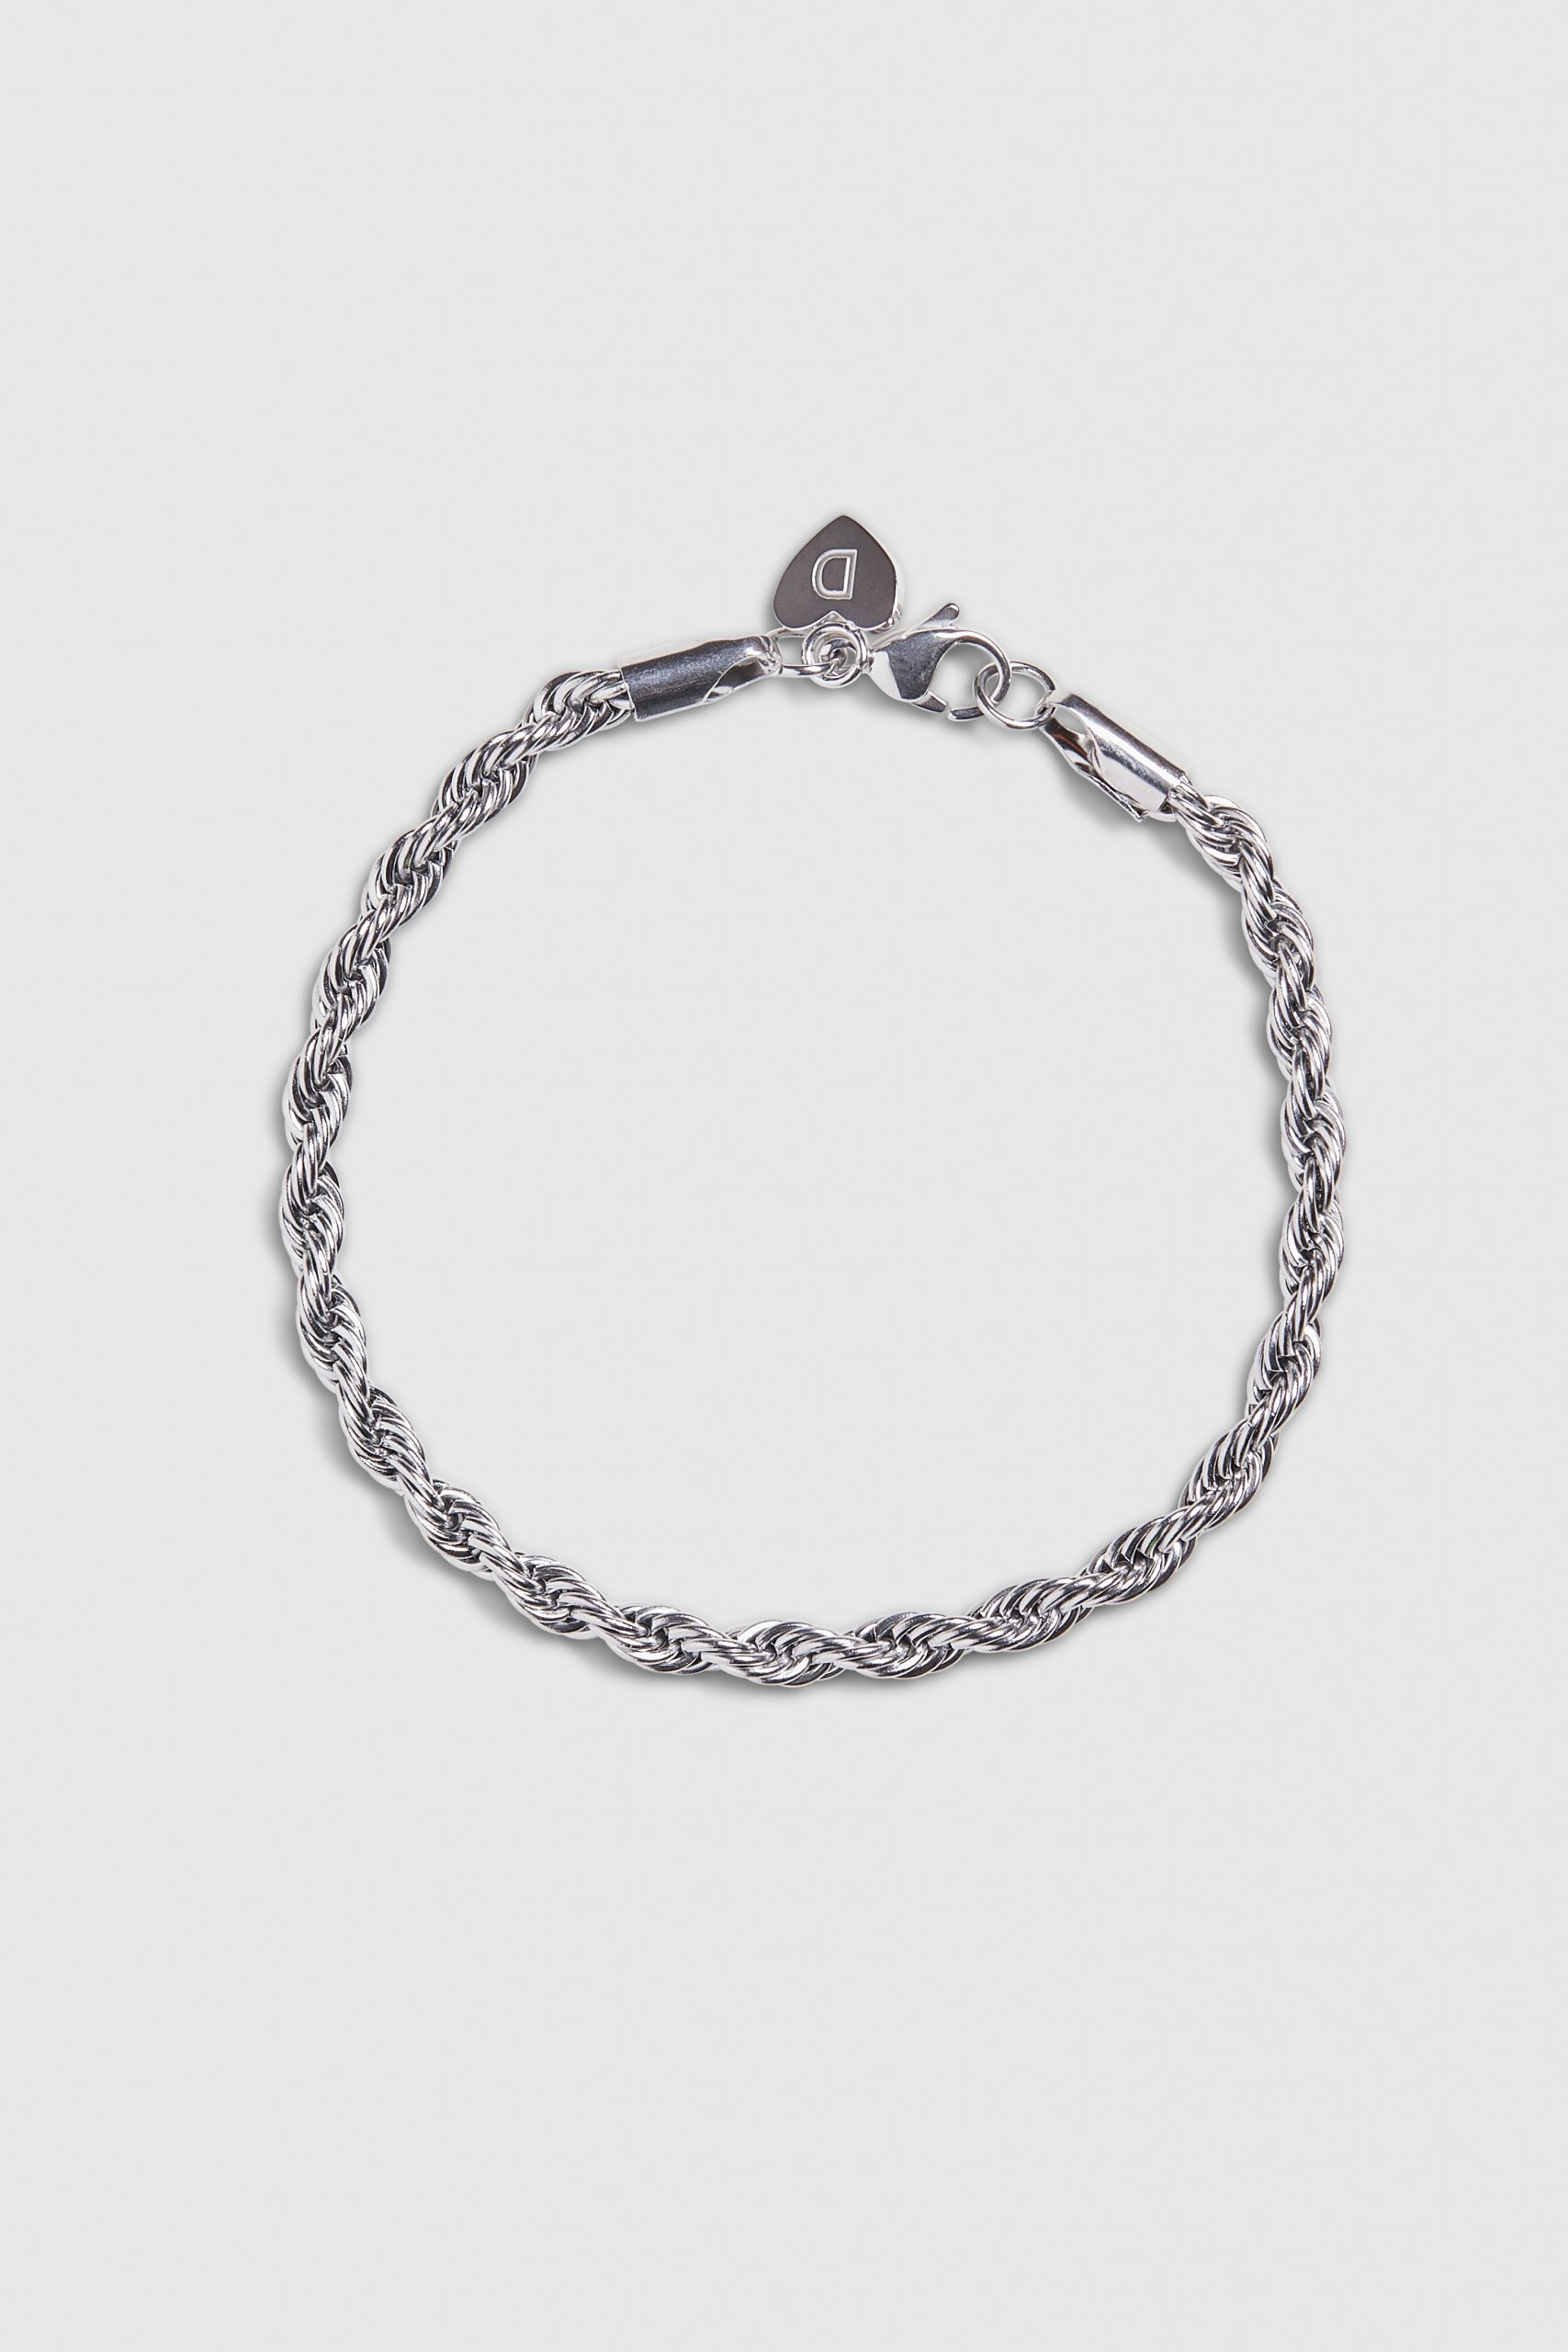 DRAE jewellery rope bracelet